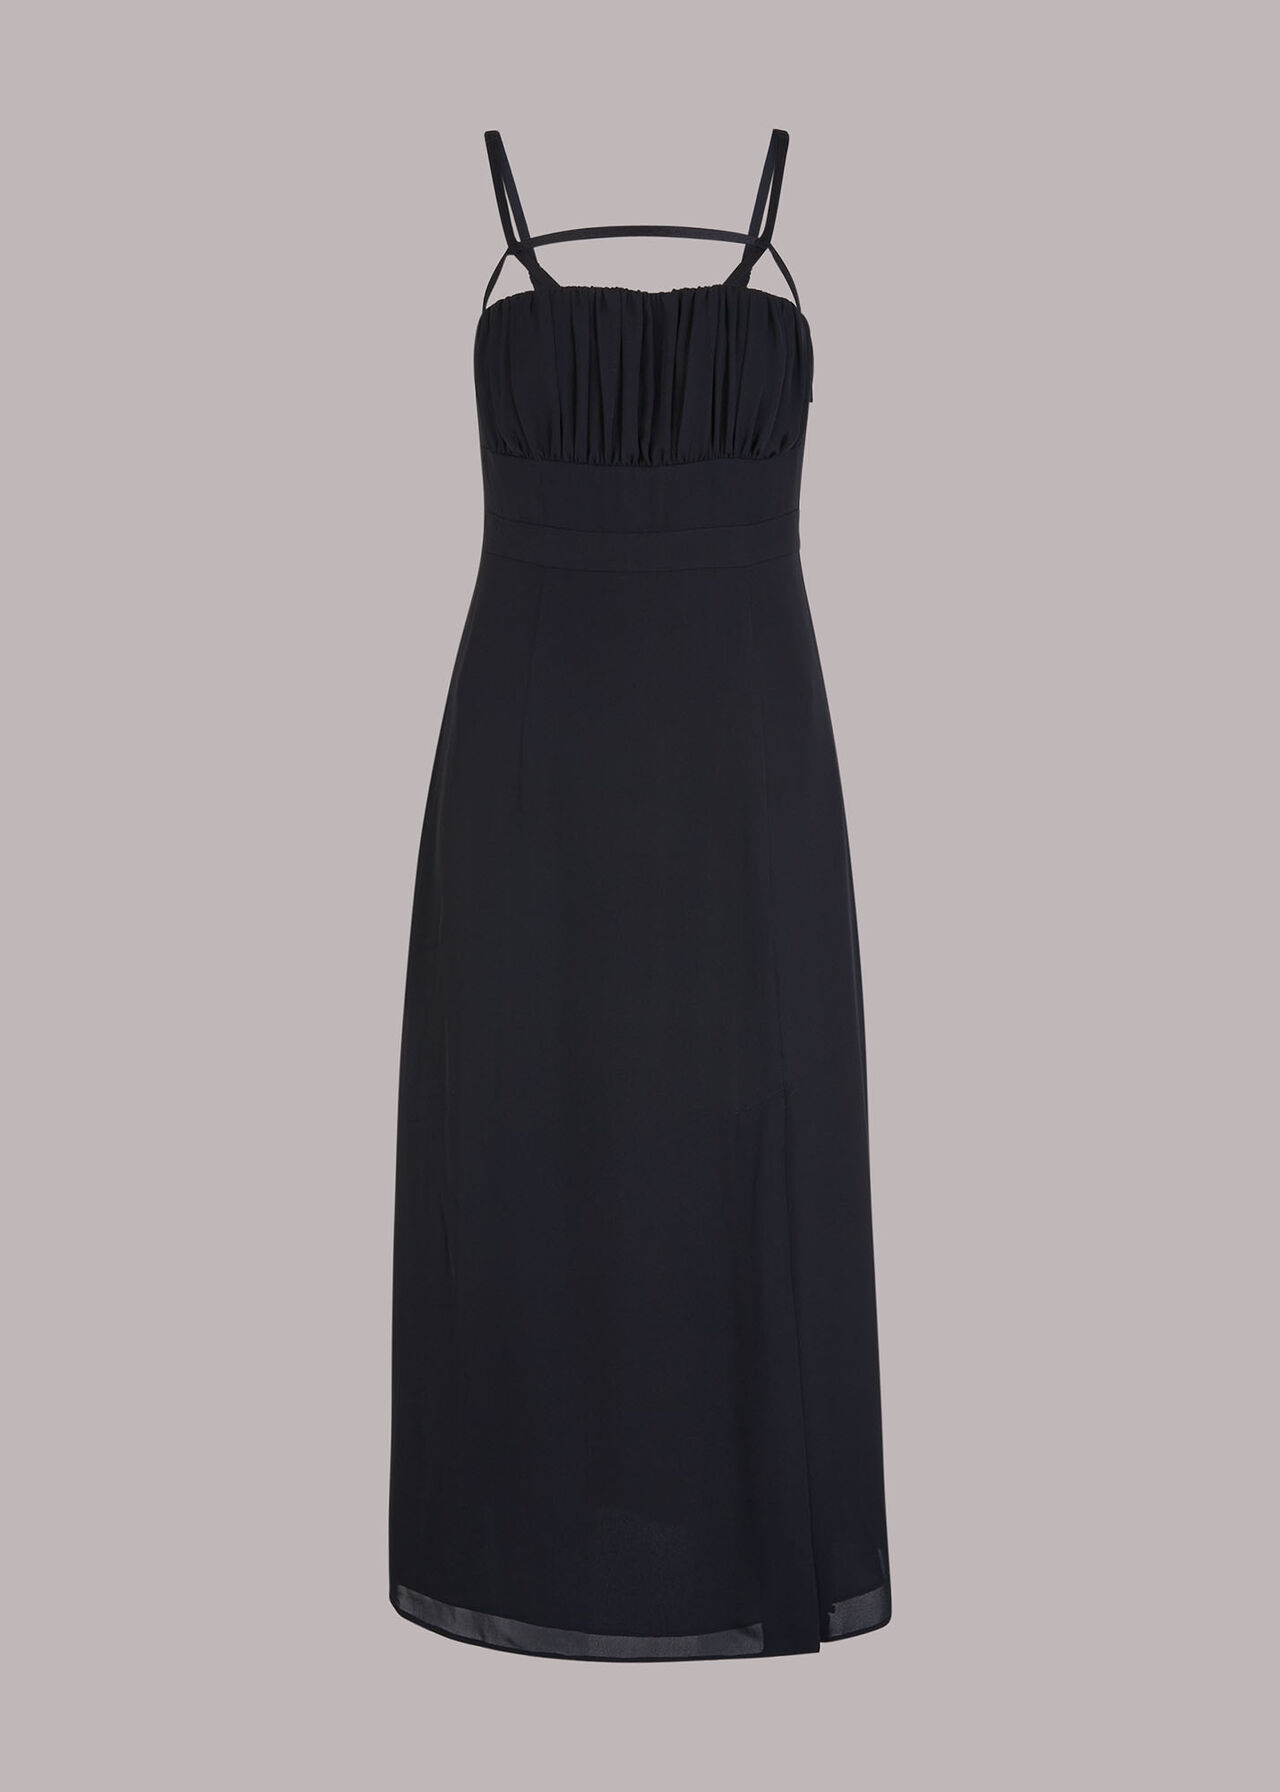 Black Silk Cut Out Detail Slip Dress | WHISTLES